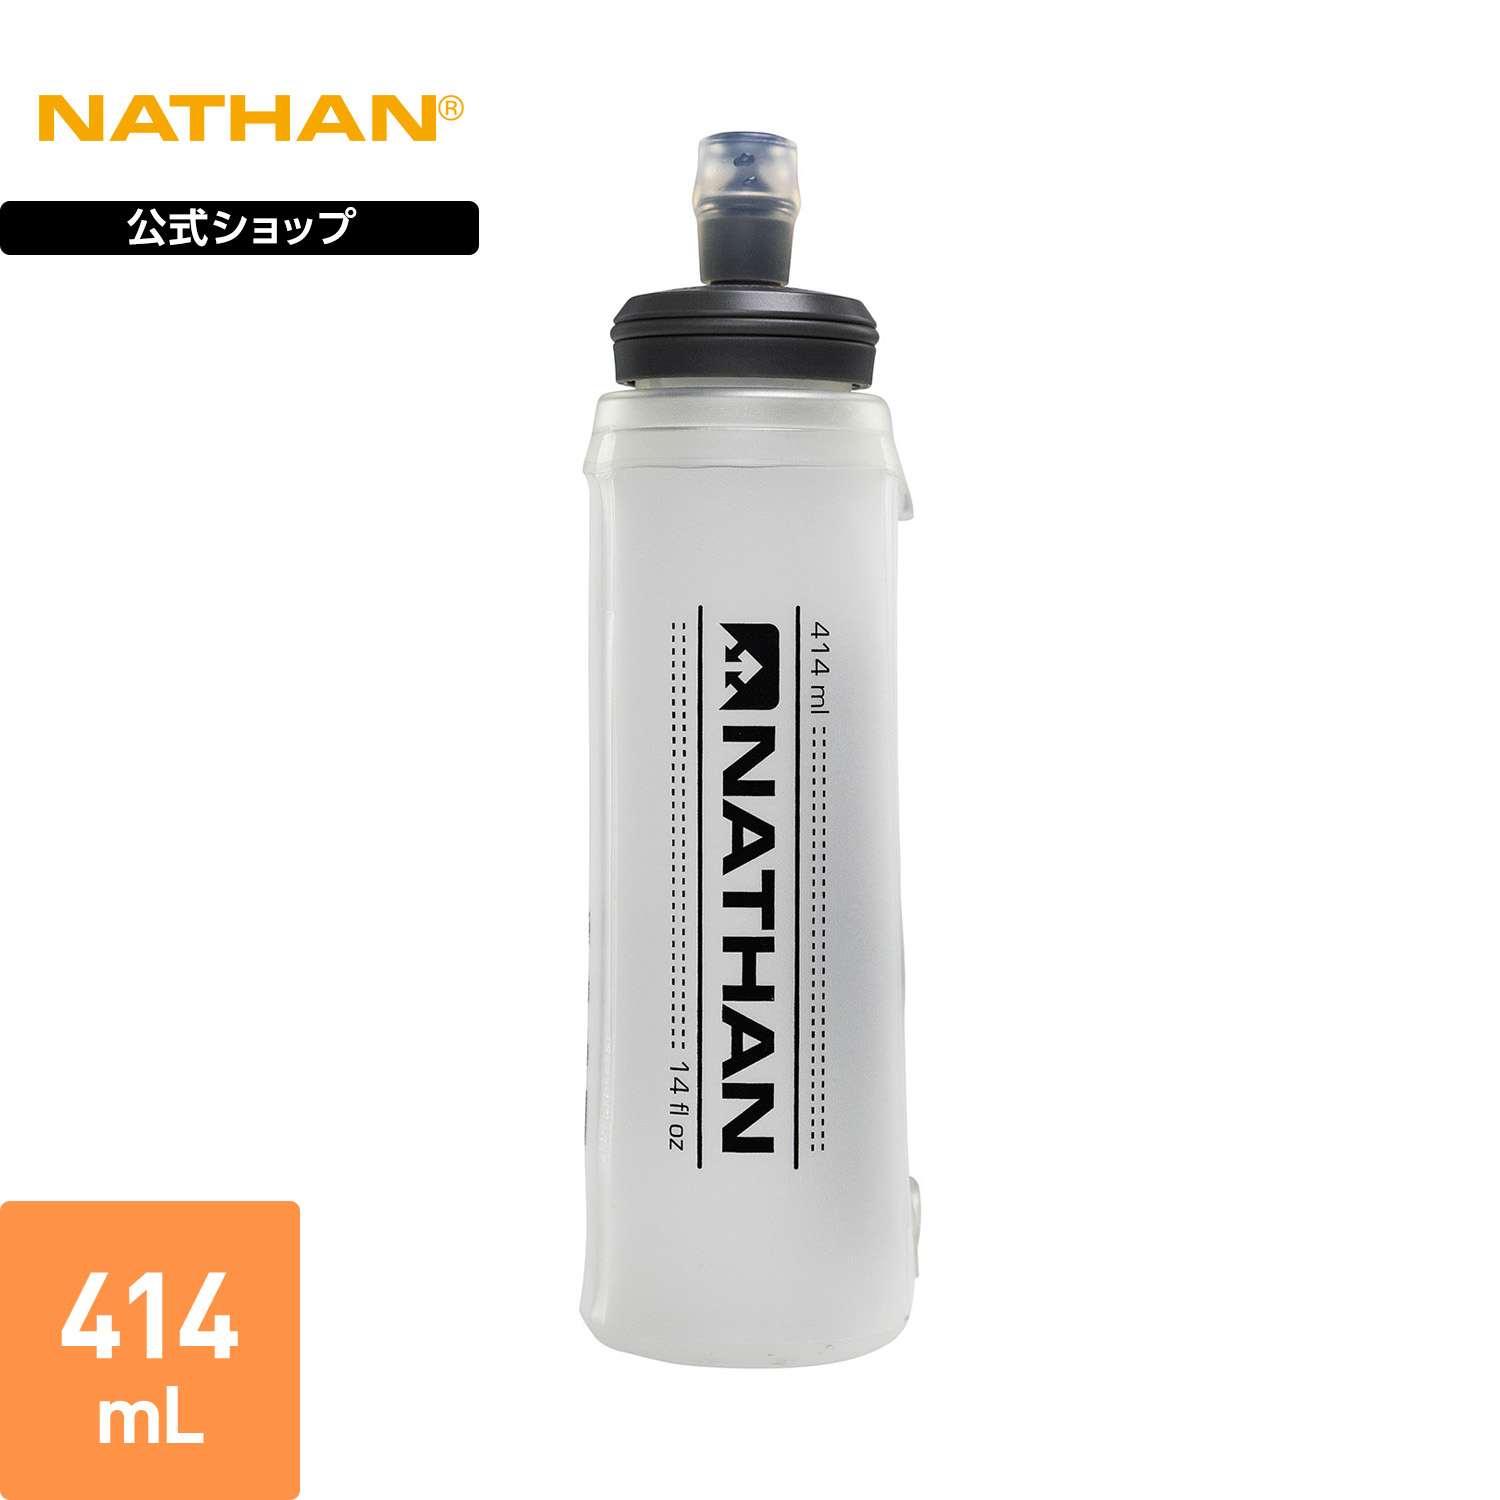  NATHAN ( ネイサン ) | イグソショットソフトフラスク 2.0 | 1個入り 414ml 冷凍可 クリア NS4012